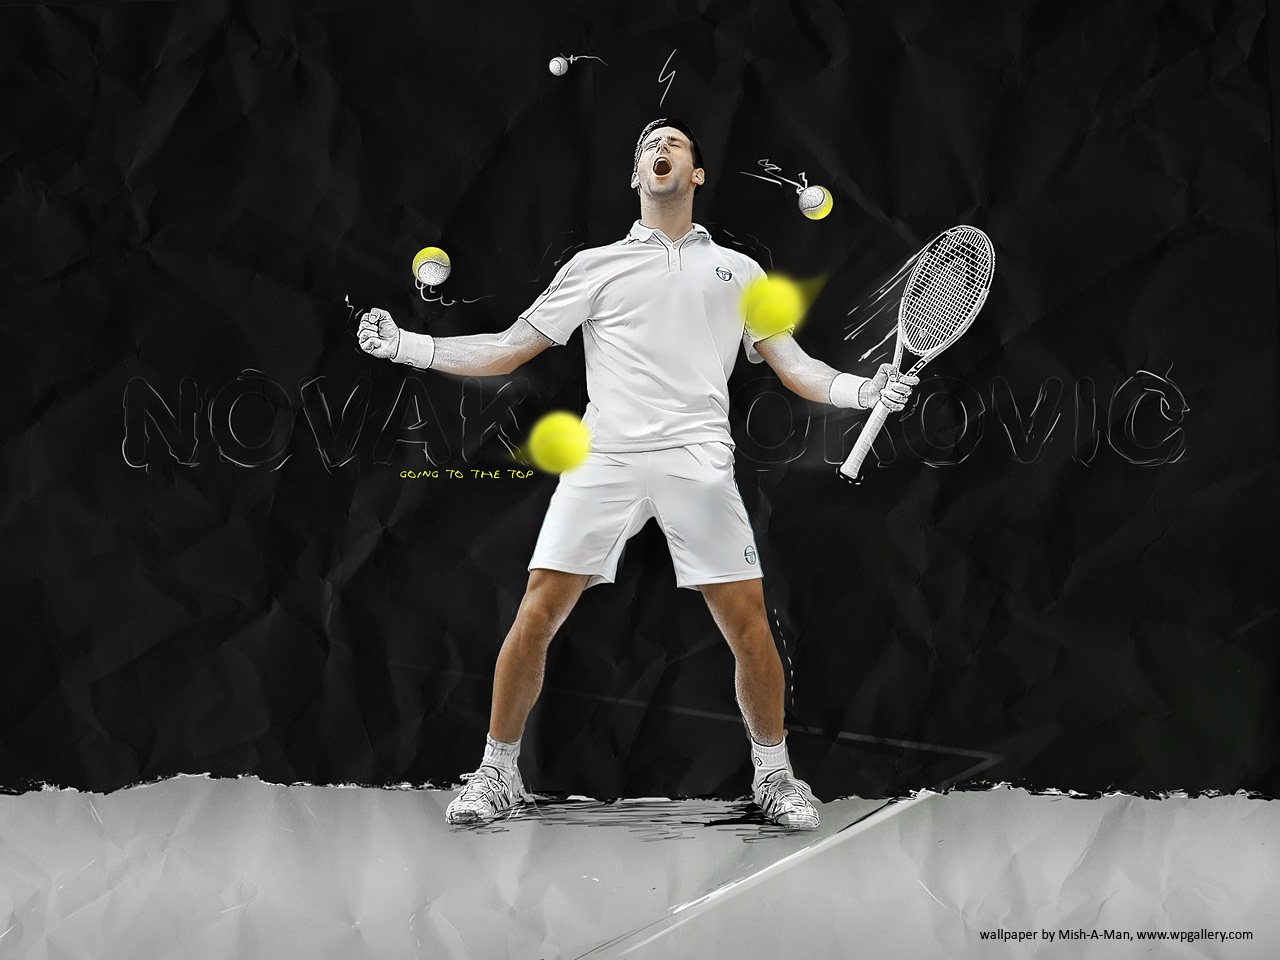 Gallery Gfx Forum Topic Novak Djokovic Tennis Wallpaper